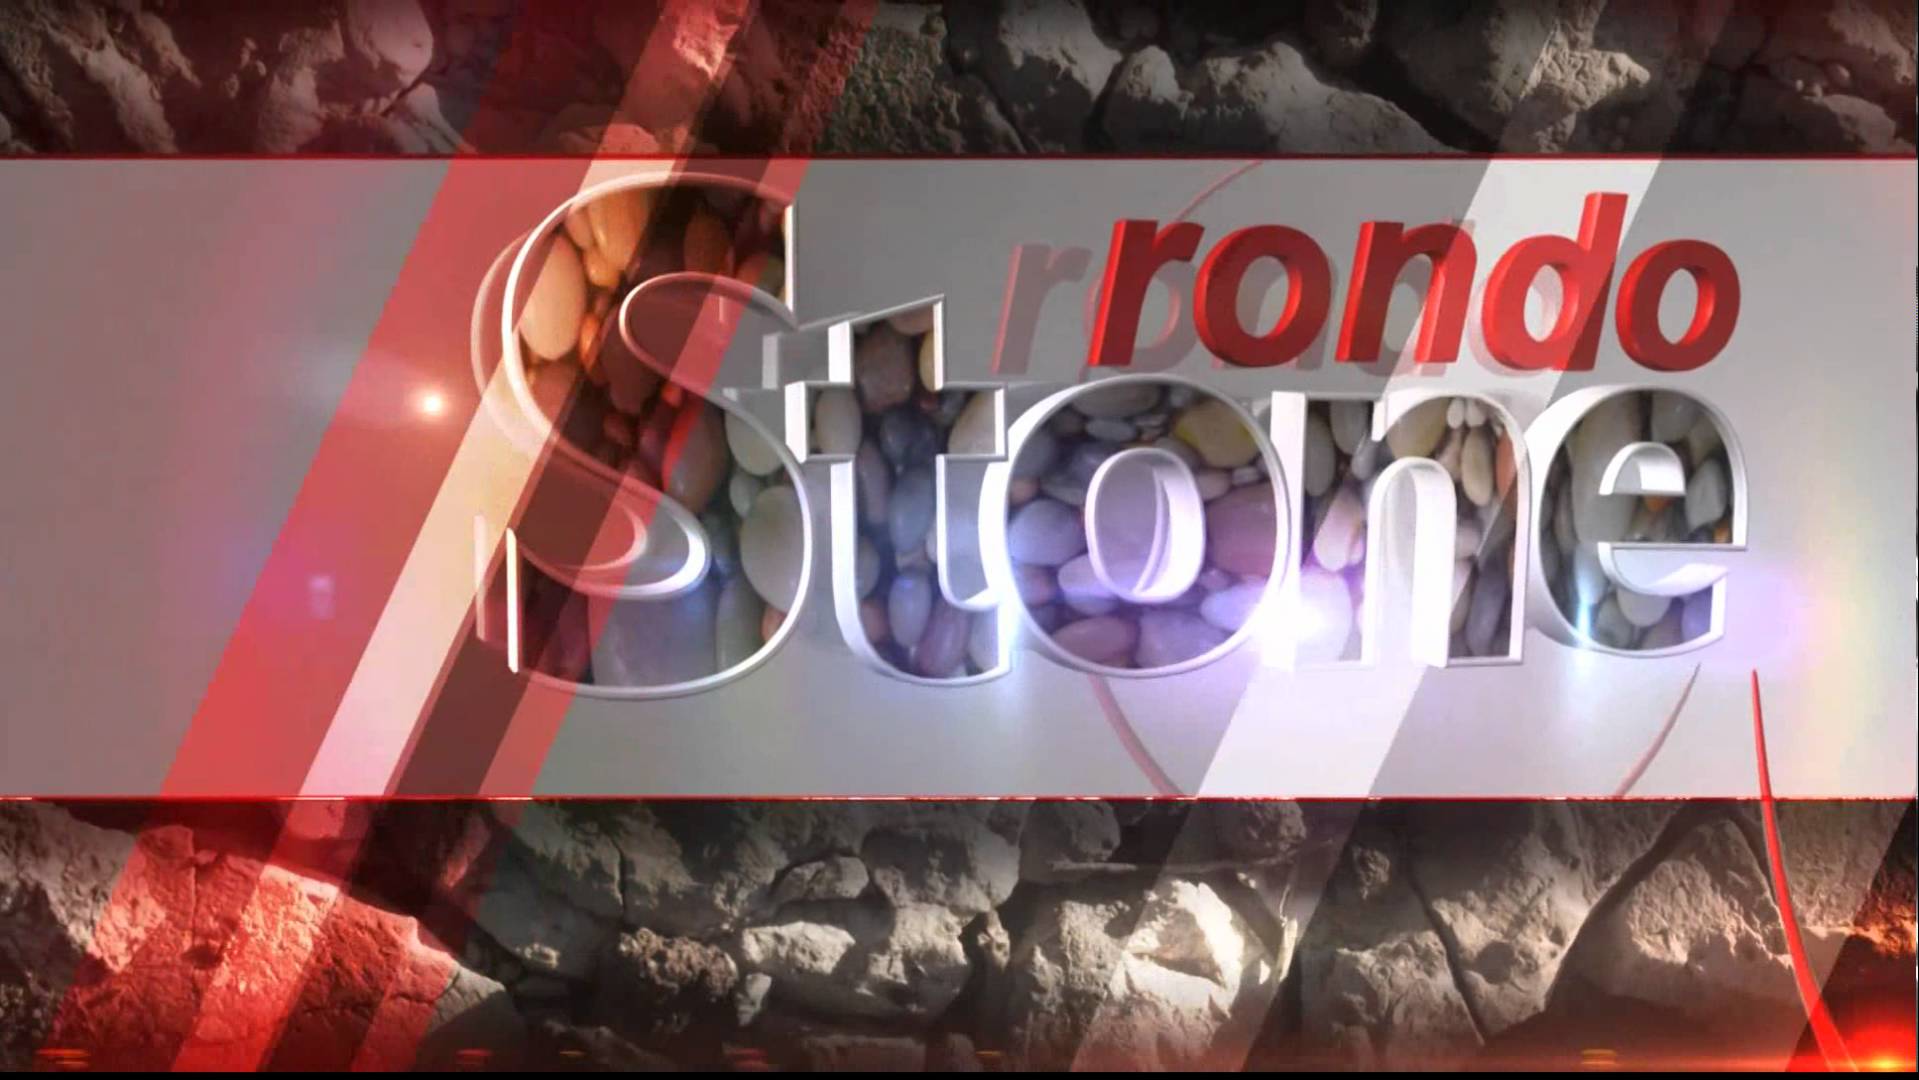 Rondo Stone